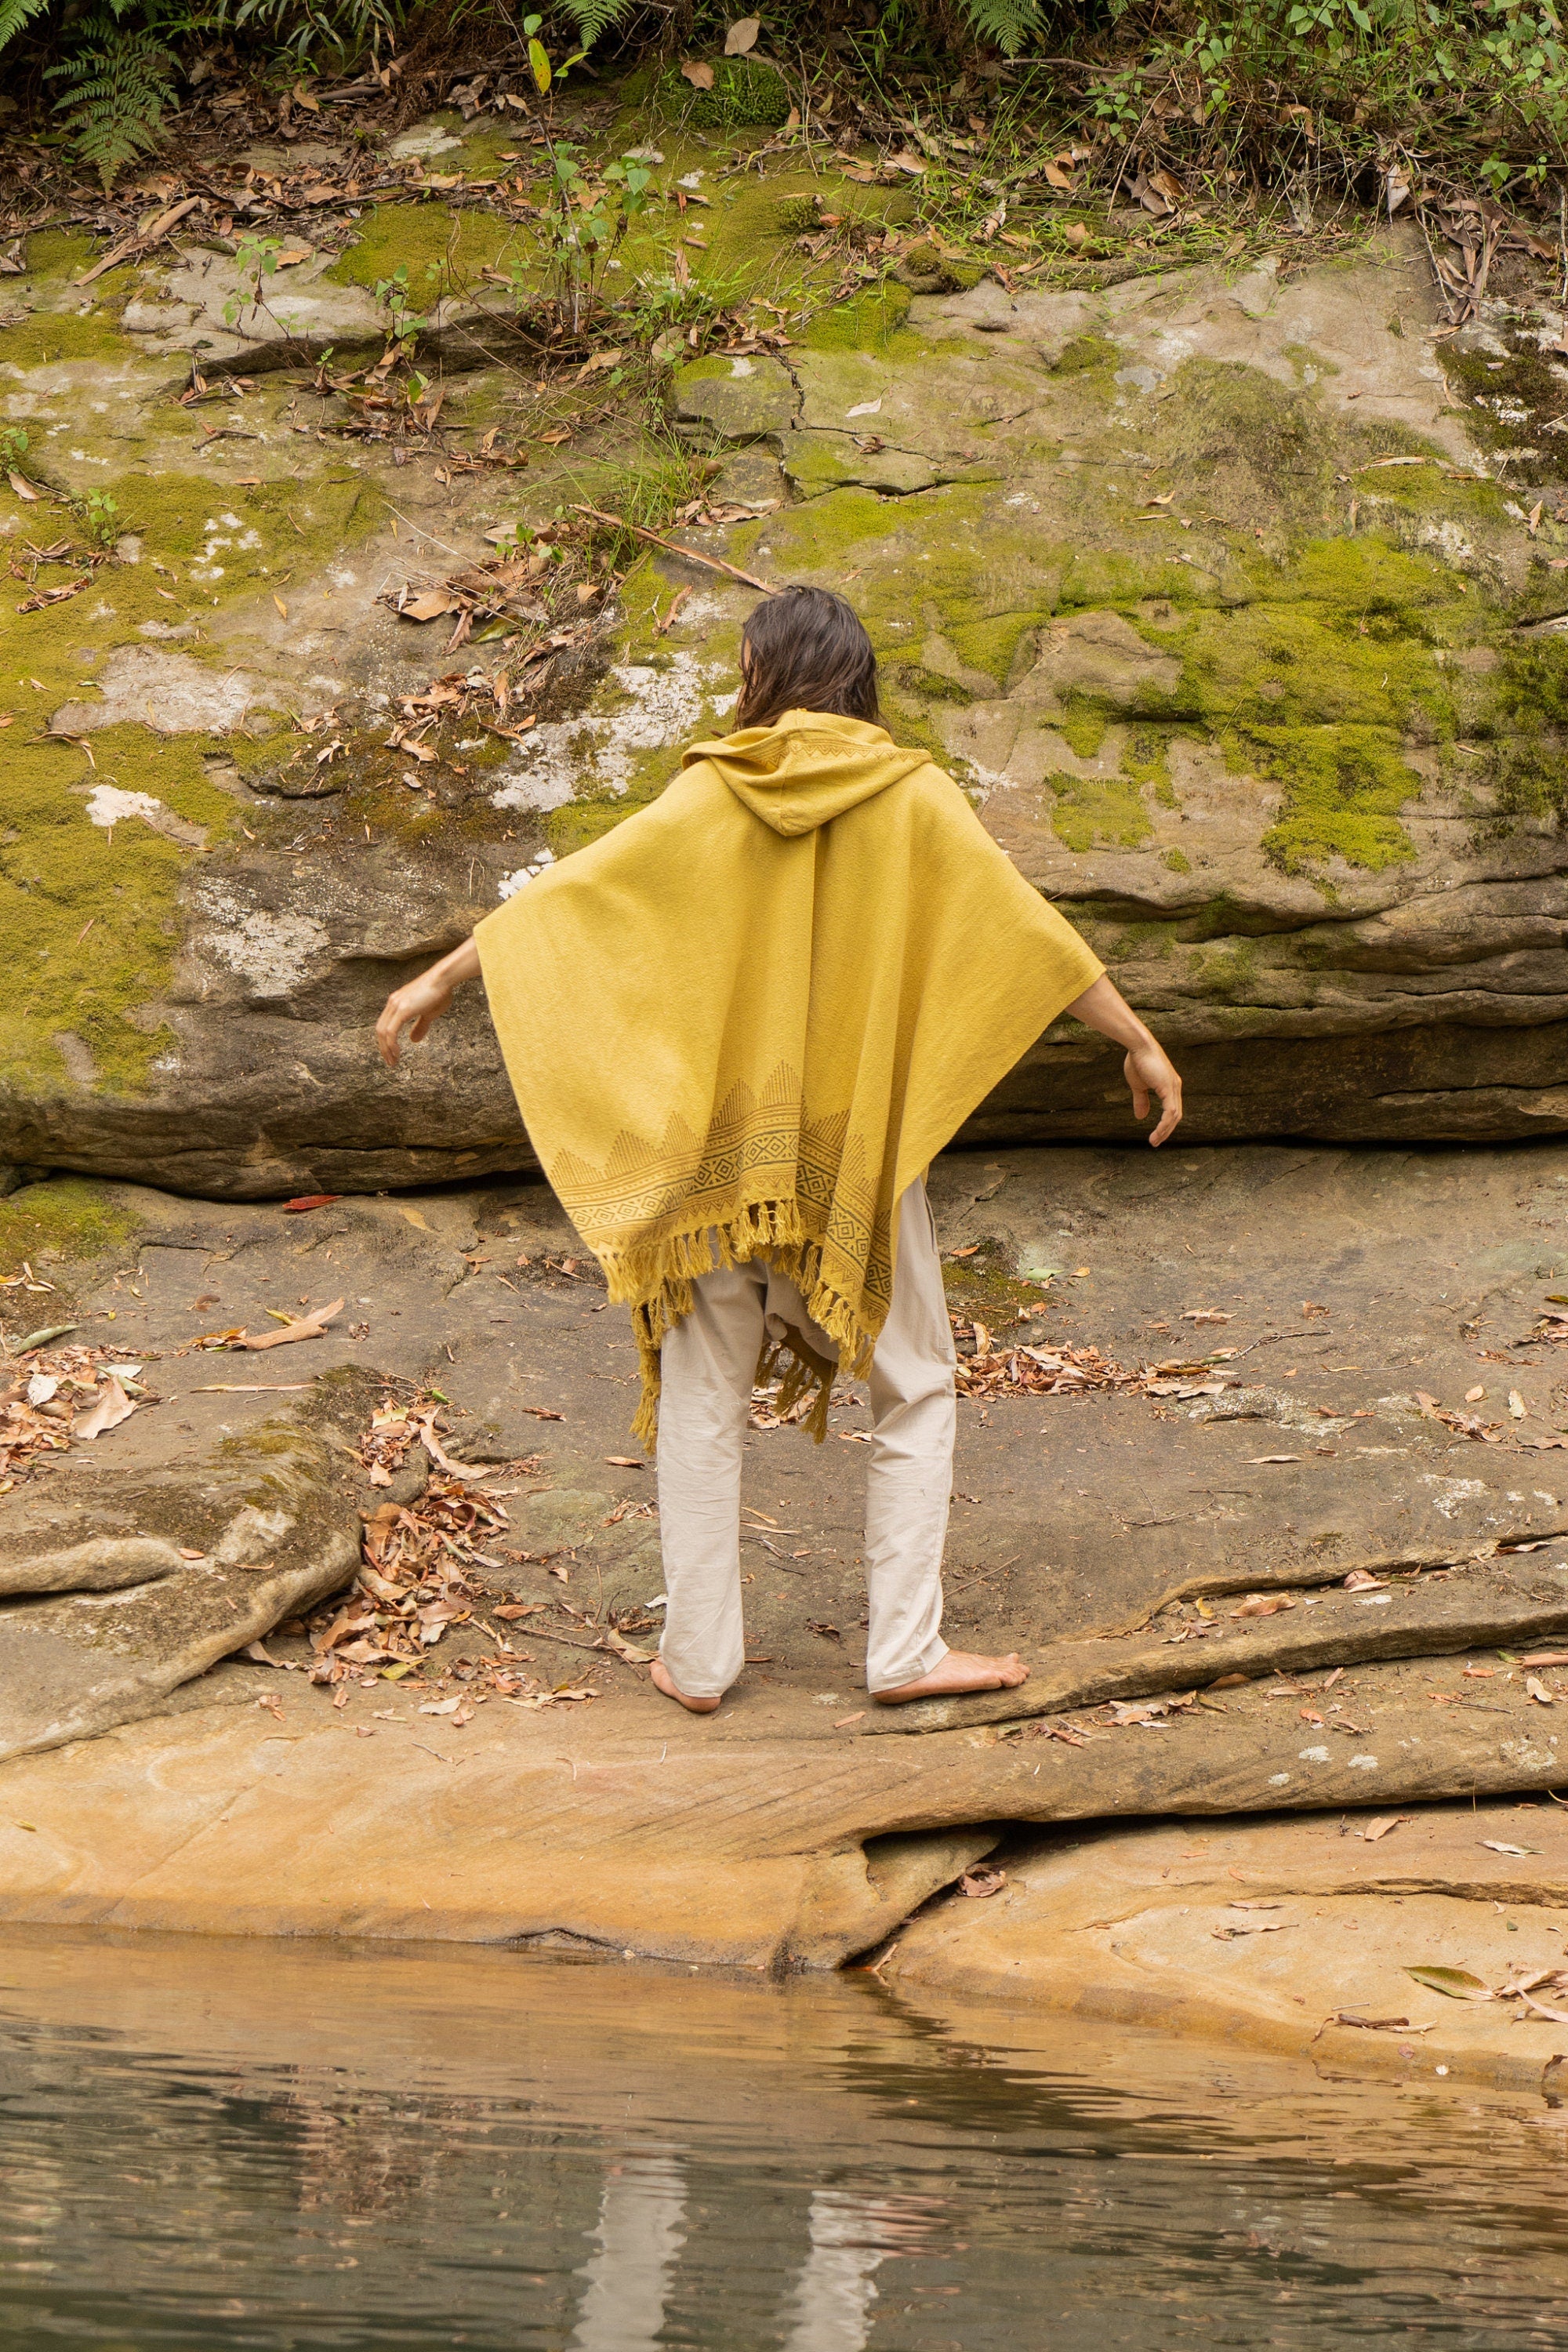 ANAGAMI Kimono Mustard Yellow Hooded Cape Poncho Robe Block Printed Natural Dyed Ceremony Ritual Shaman Tribal Alchemy Sacred Shawl AJJAYA